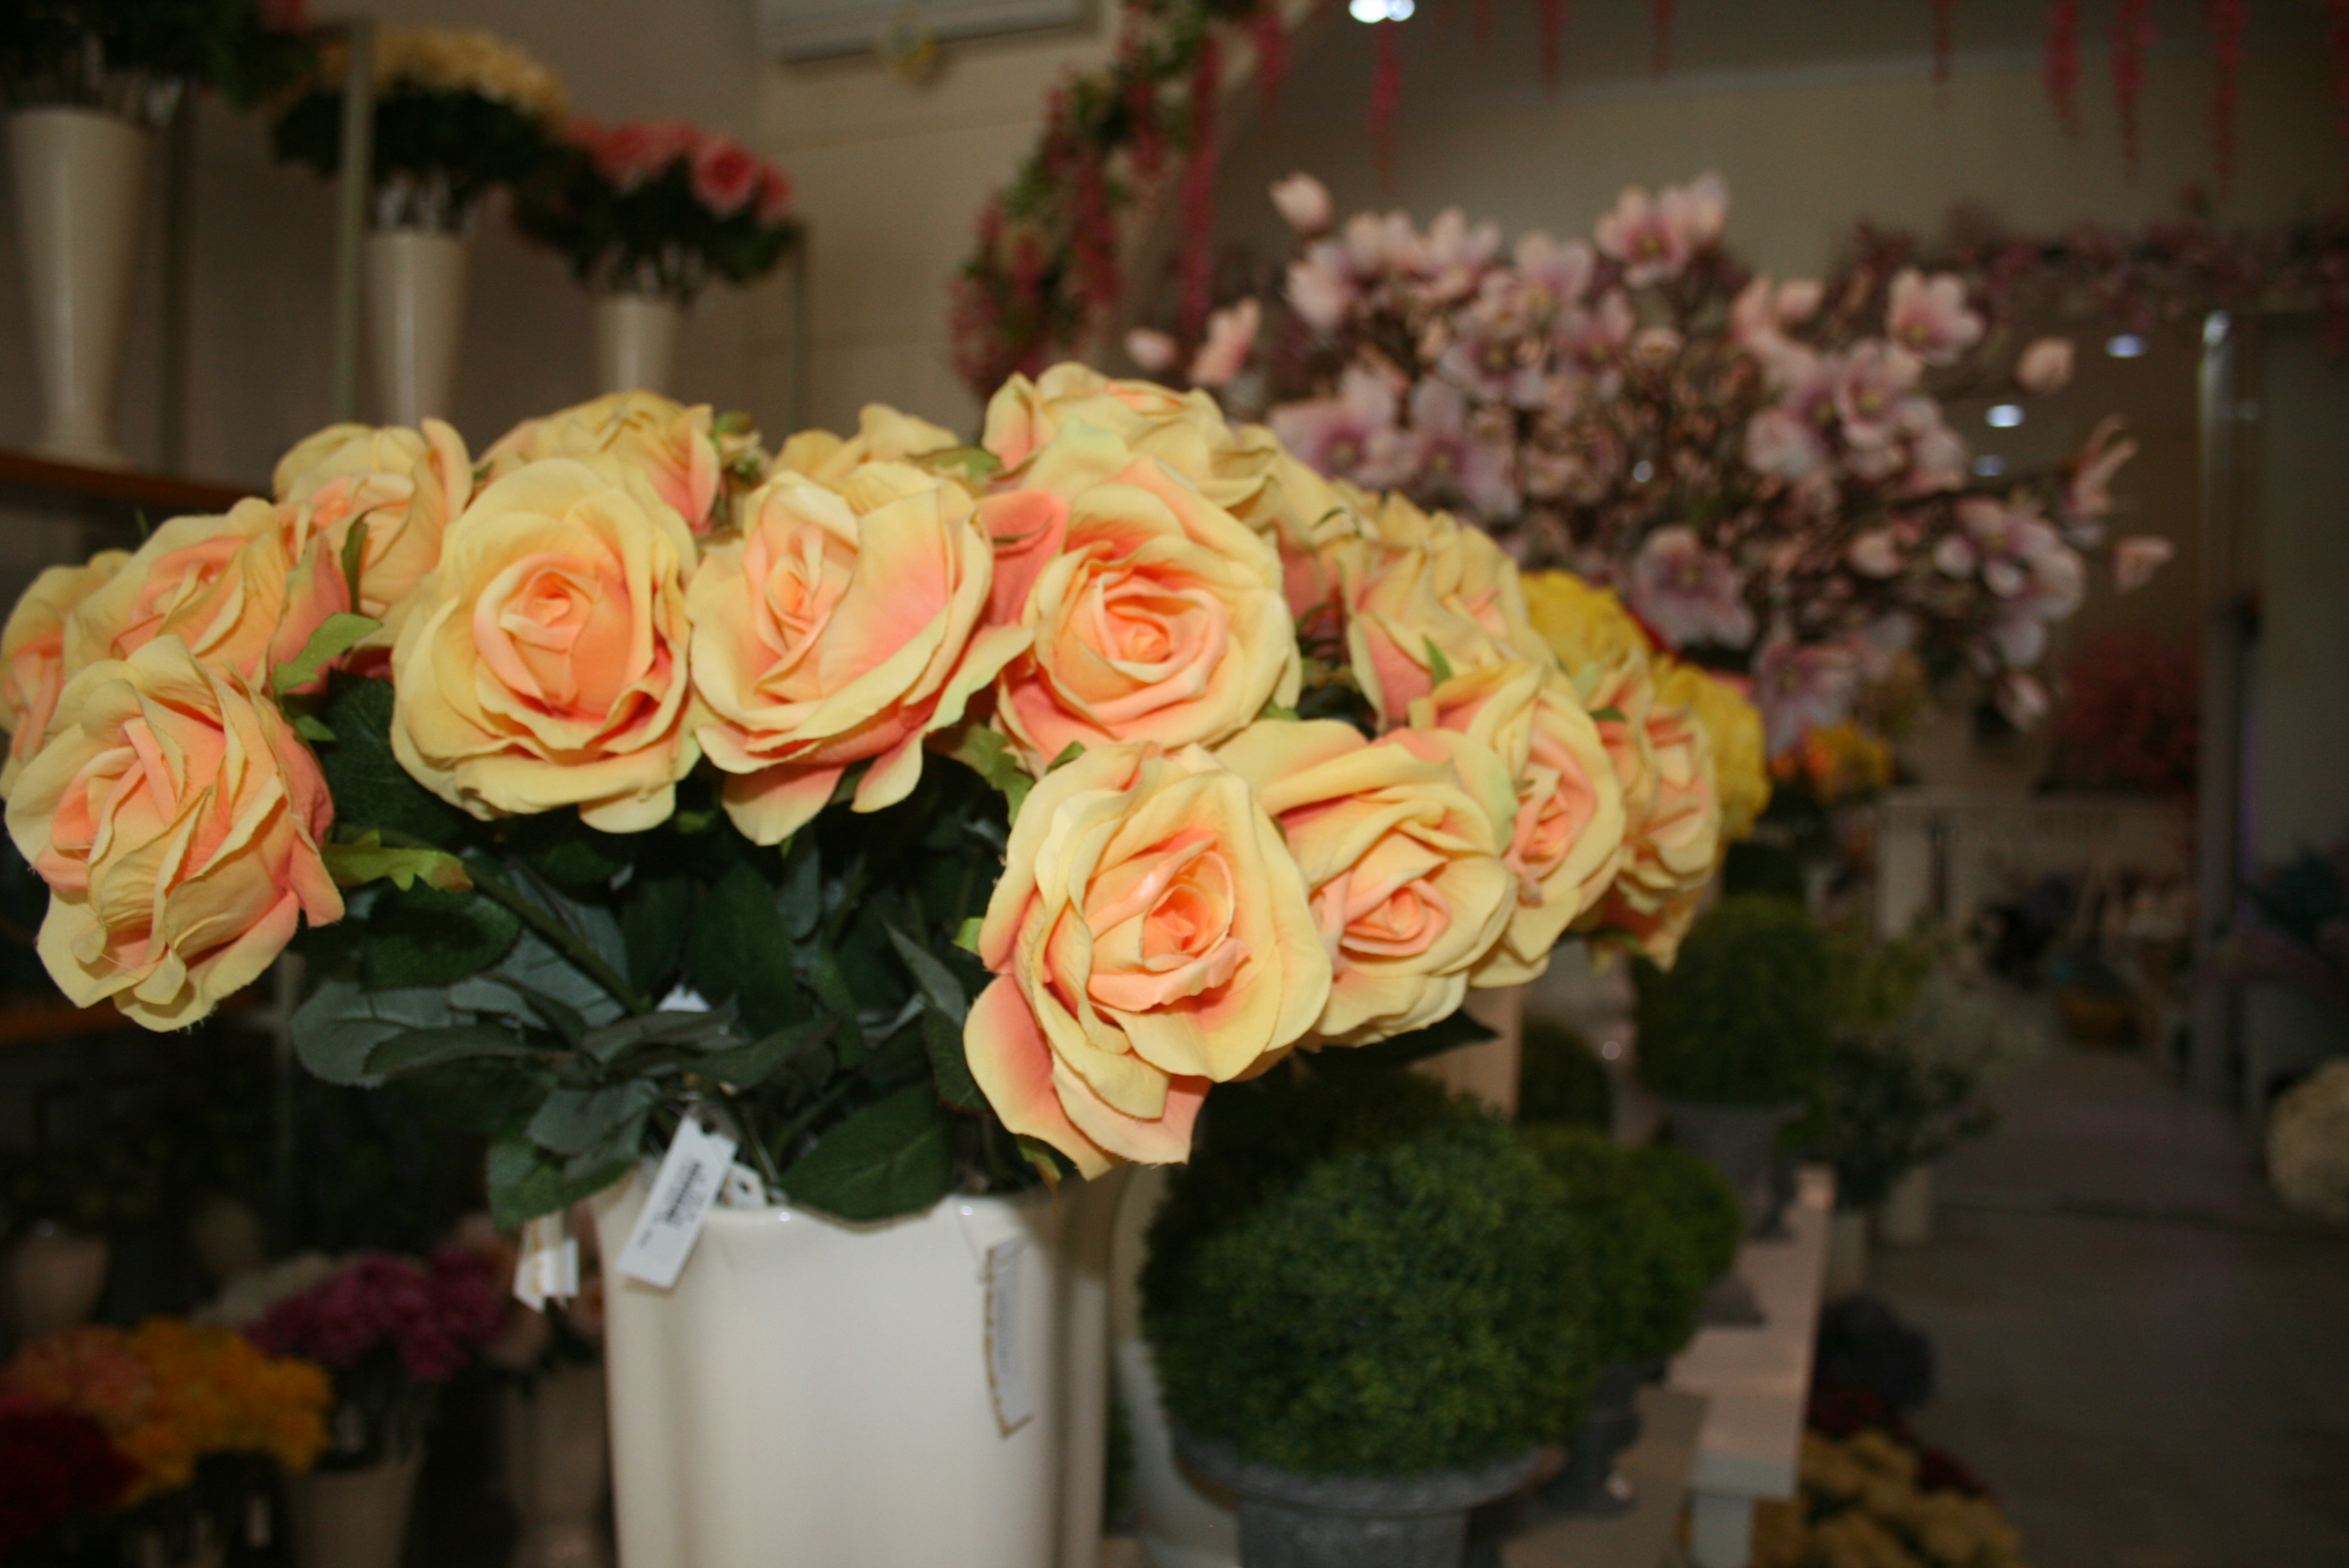 Foto: Jenis bouquet La Madame Florist/Dok: indotrading.com